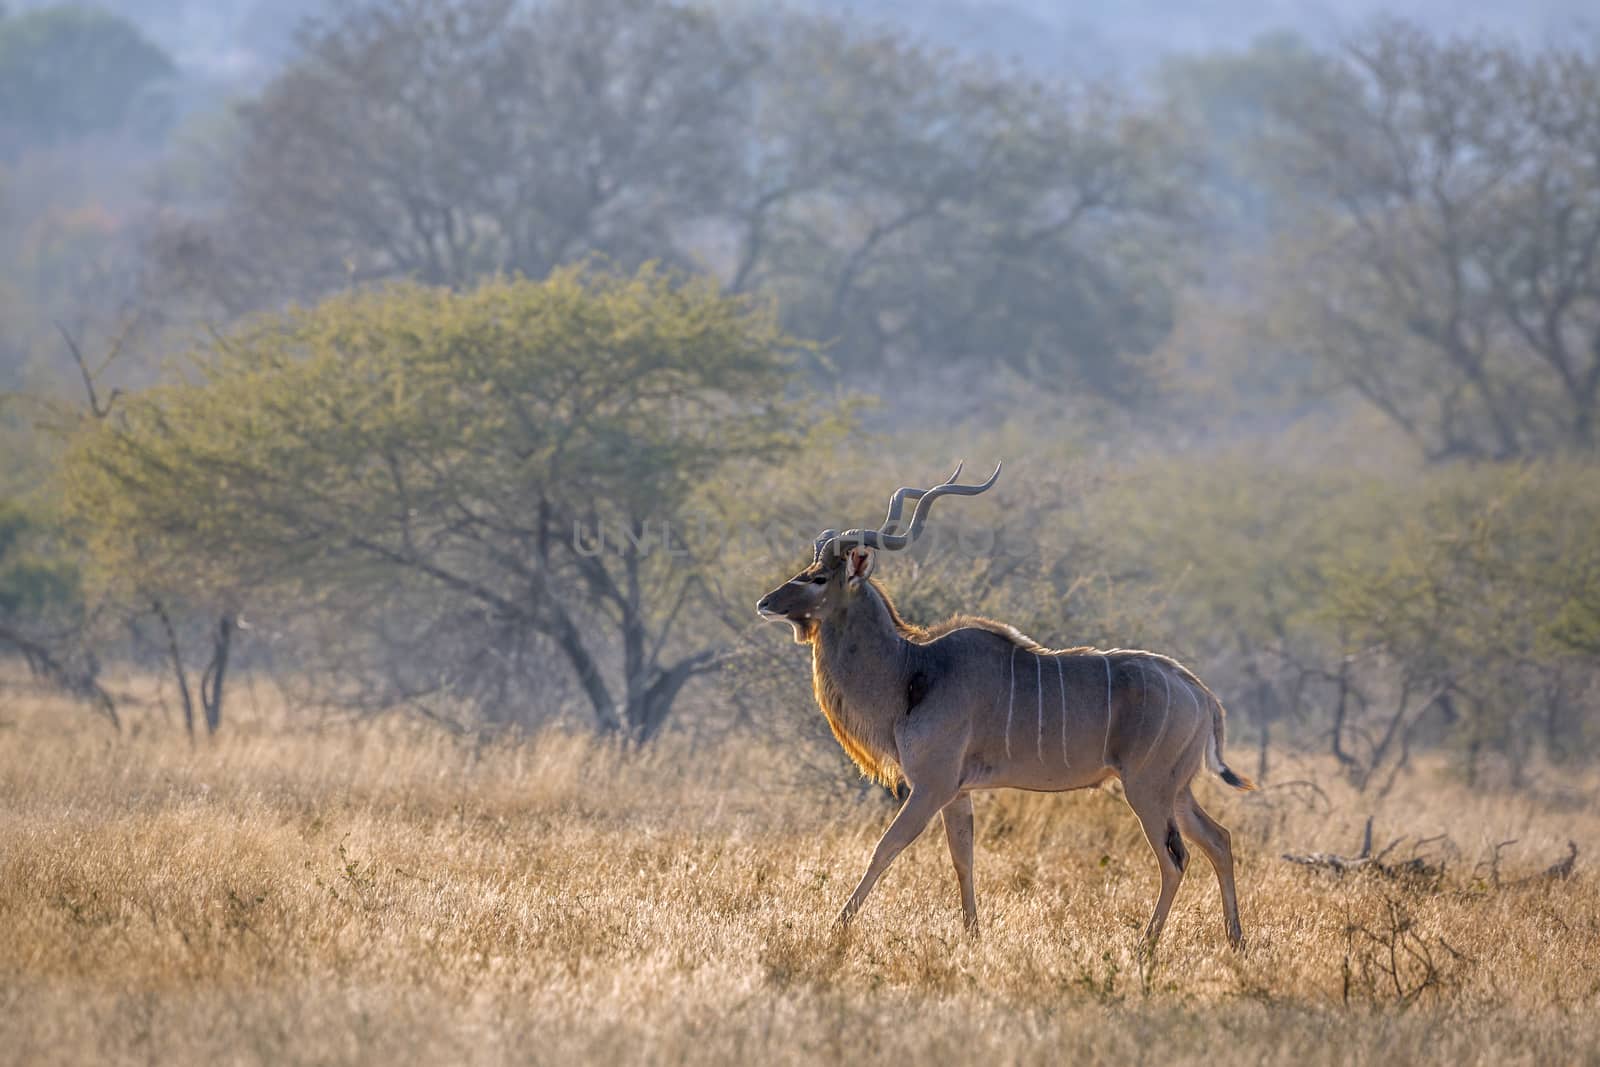 Greater kudu male in savannah scenery in Kruger National park, South Africa ; Specie Tragelaphus strepsiceros family of Bovidae